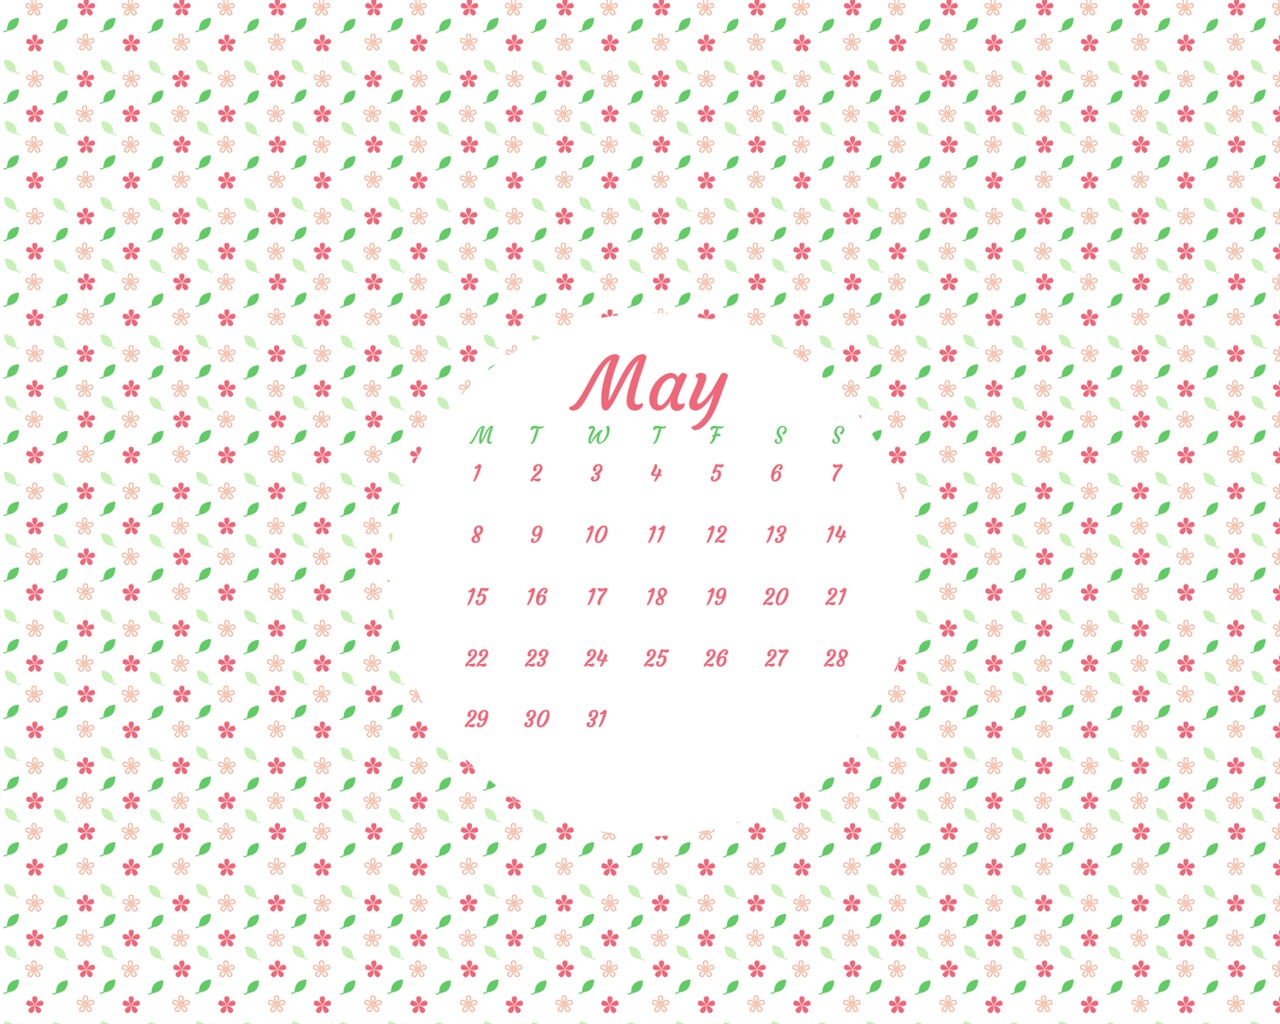 May 2017 calendar wallpaper #8 - 1280x1024